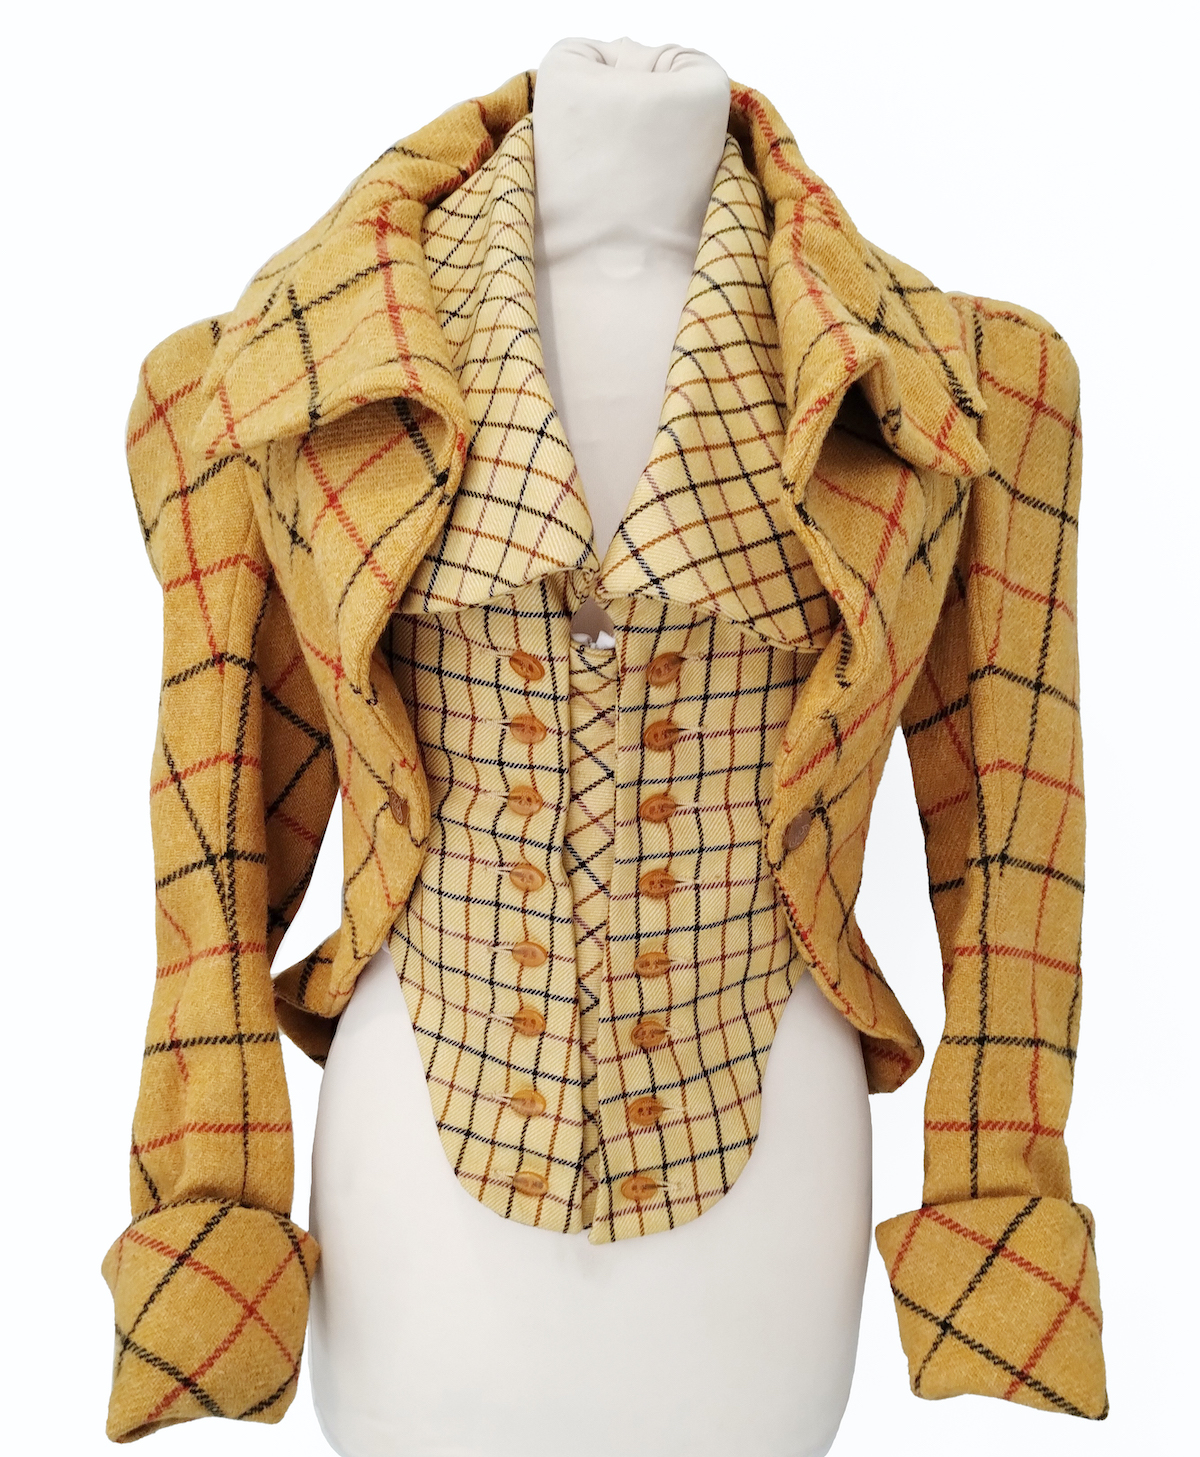 Vivien Westwood Jacket and Waistcoat